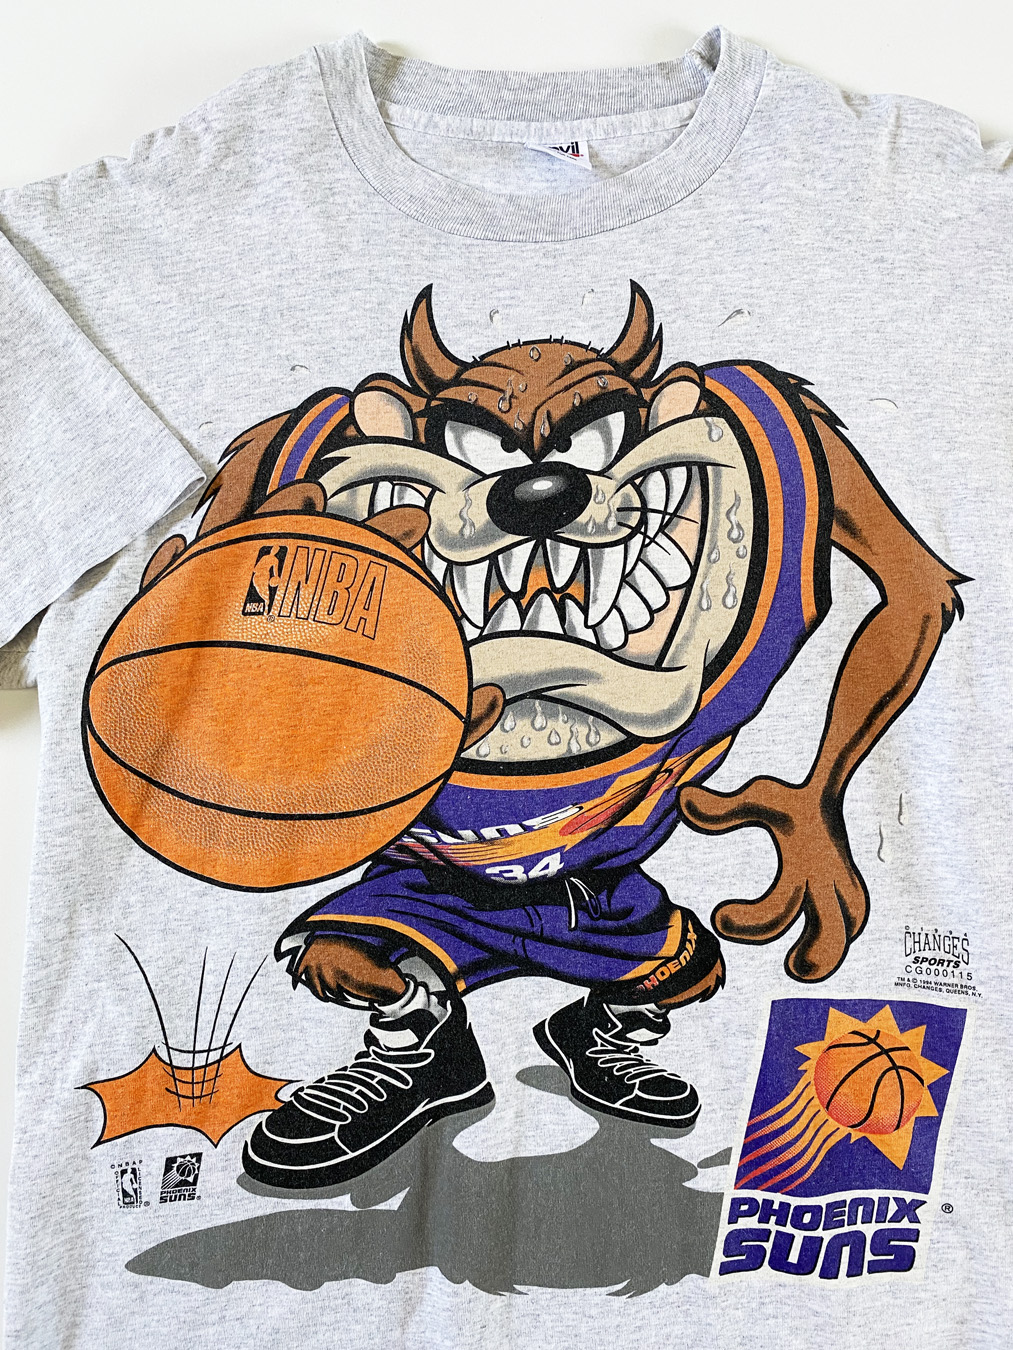 Phoenix Suns Chicago Bulls Finals Shirt Taz Looney Tunes - High